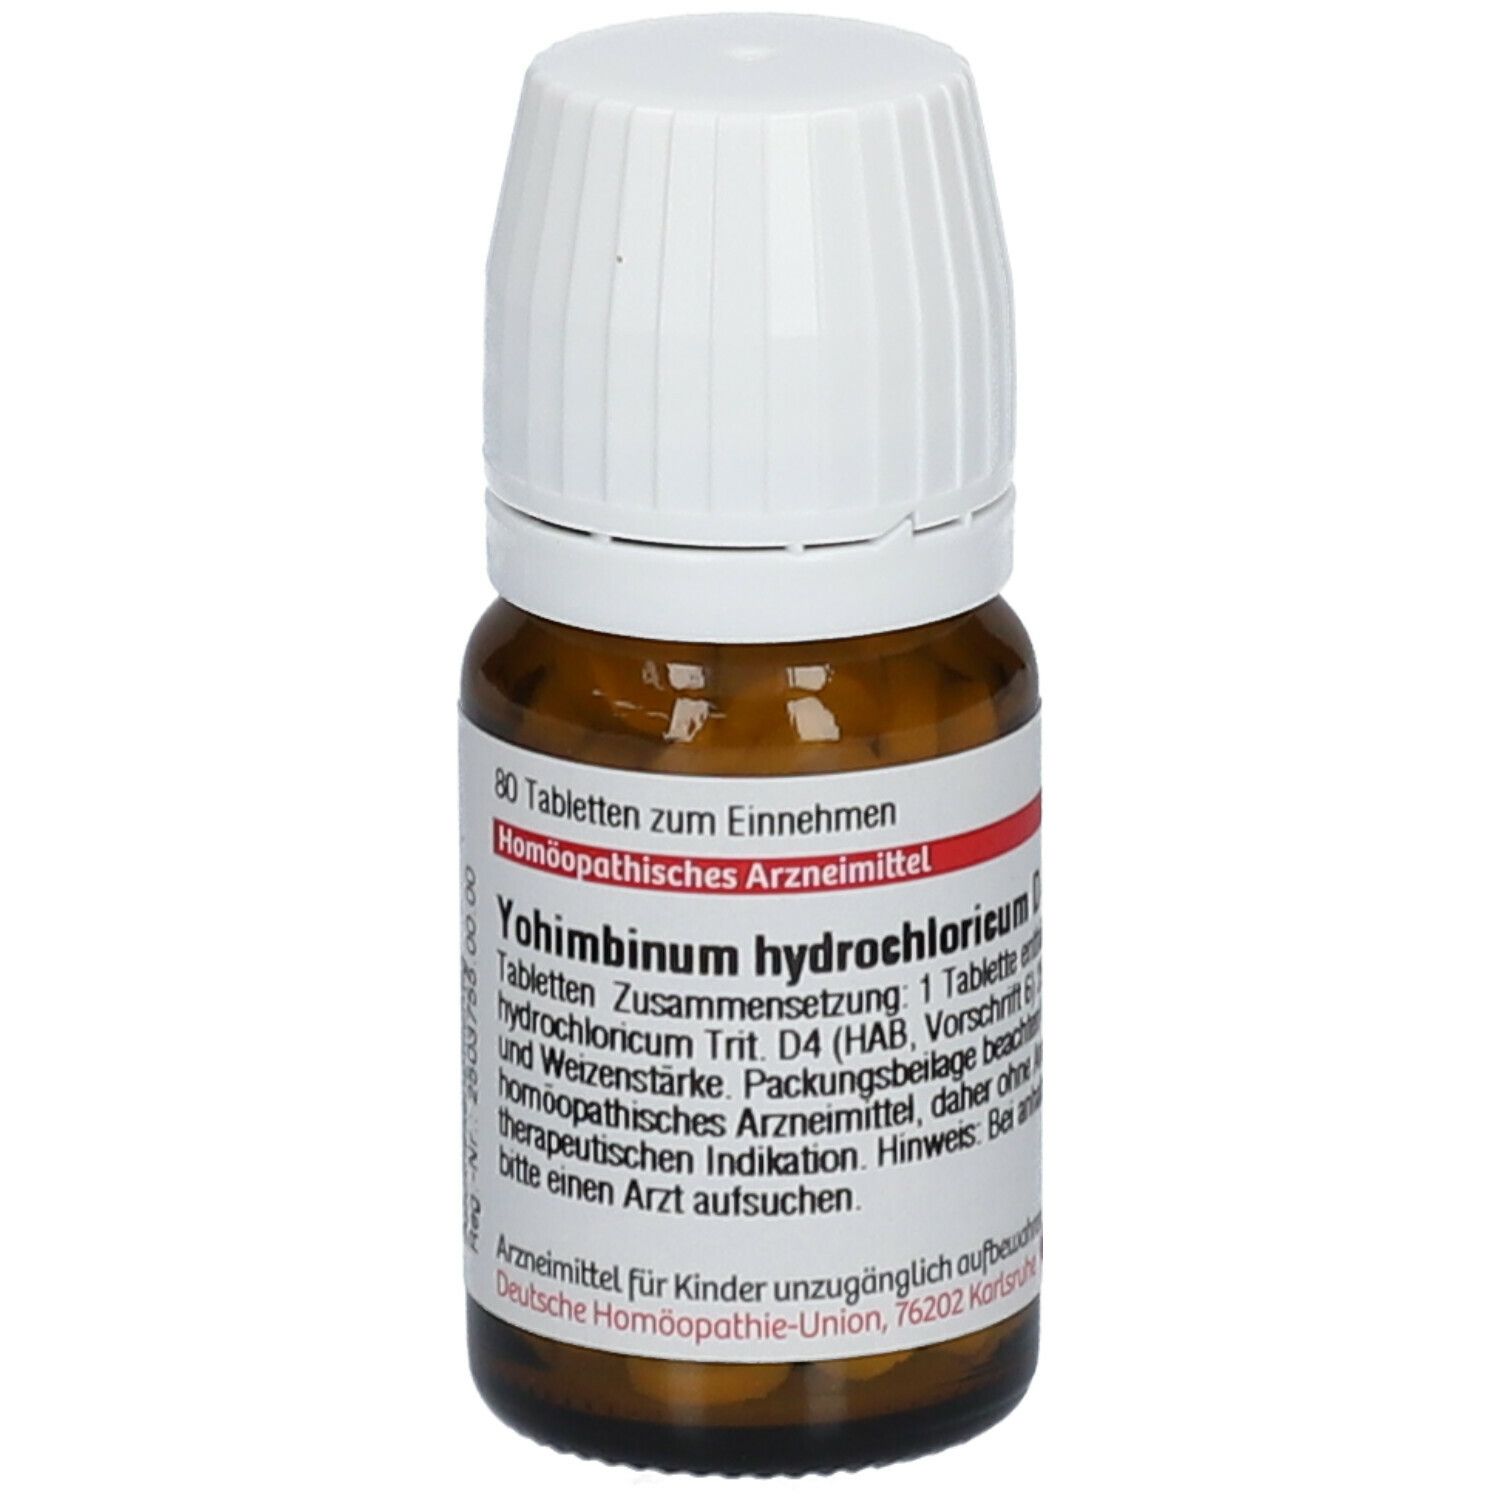 DHU Yohimbinum Hydrochloricum D4